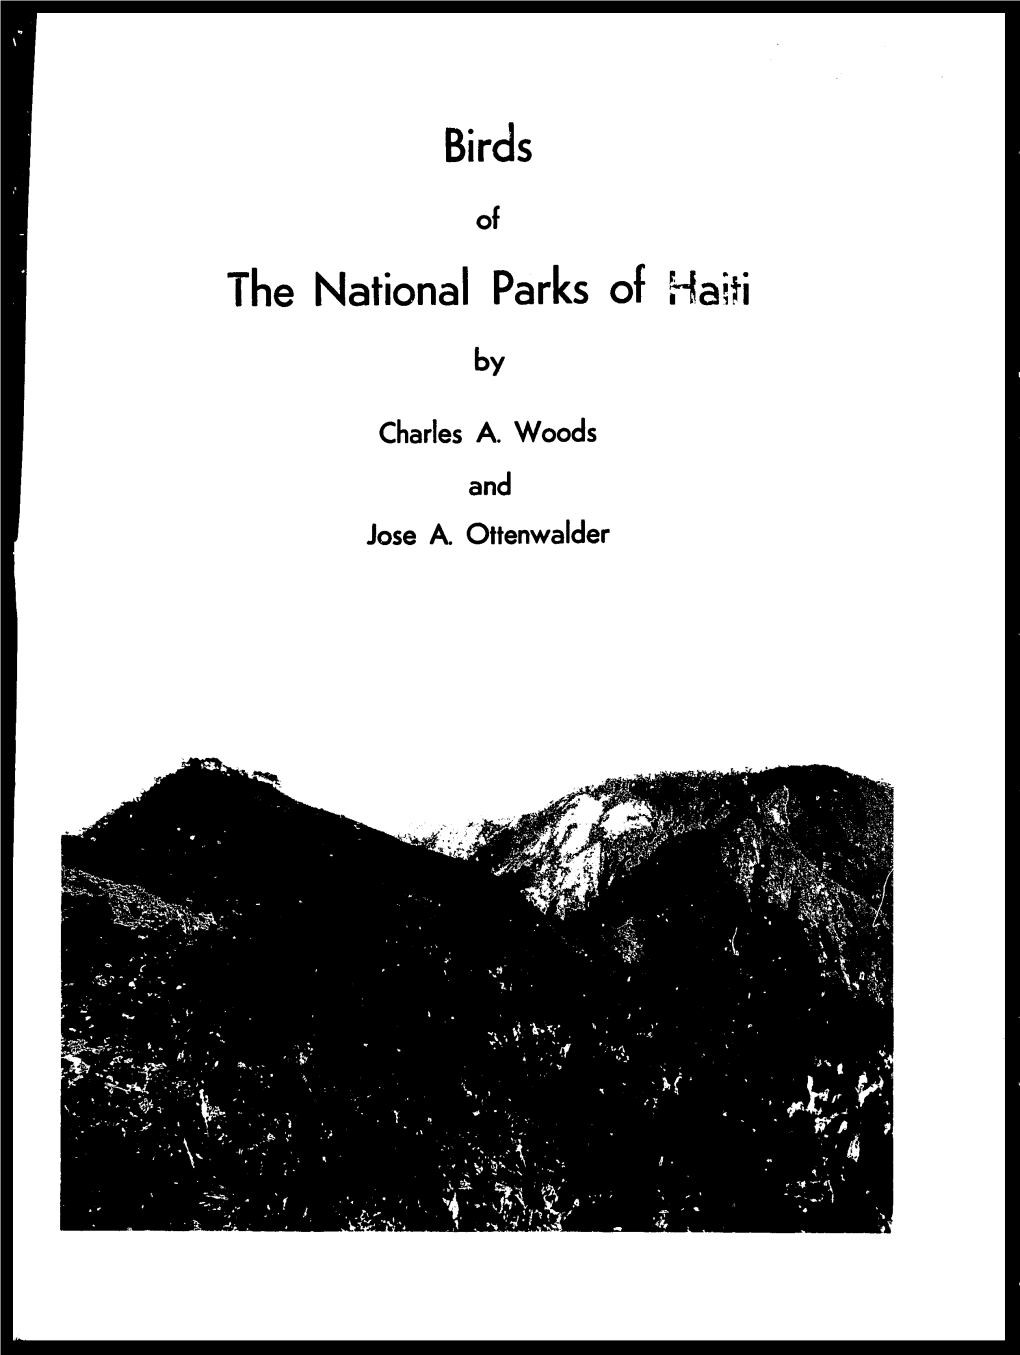 The National Parks of Haiti